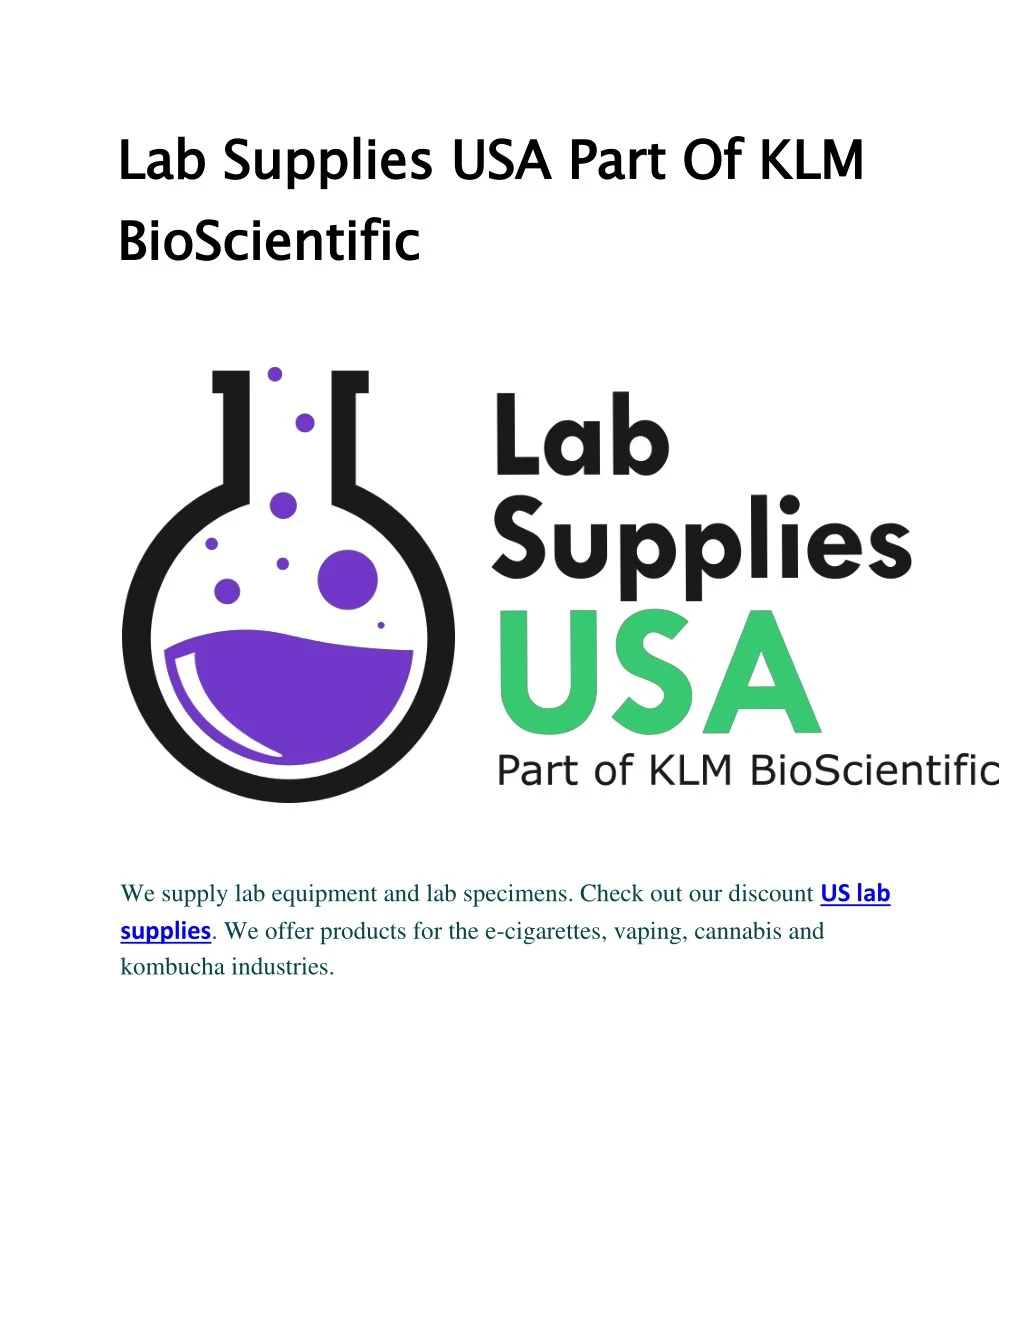 lab supplies usa part of klm bioscientific